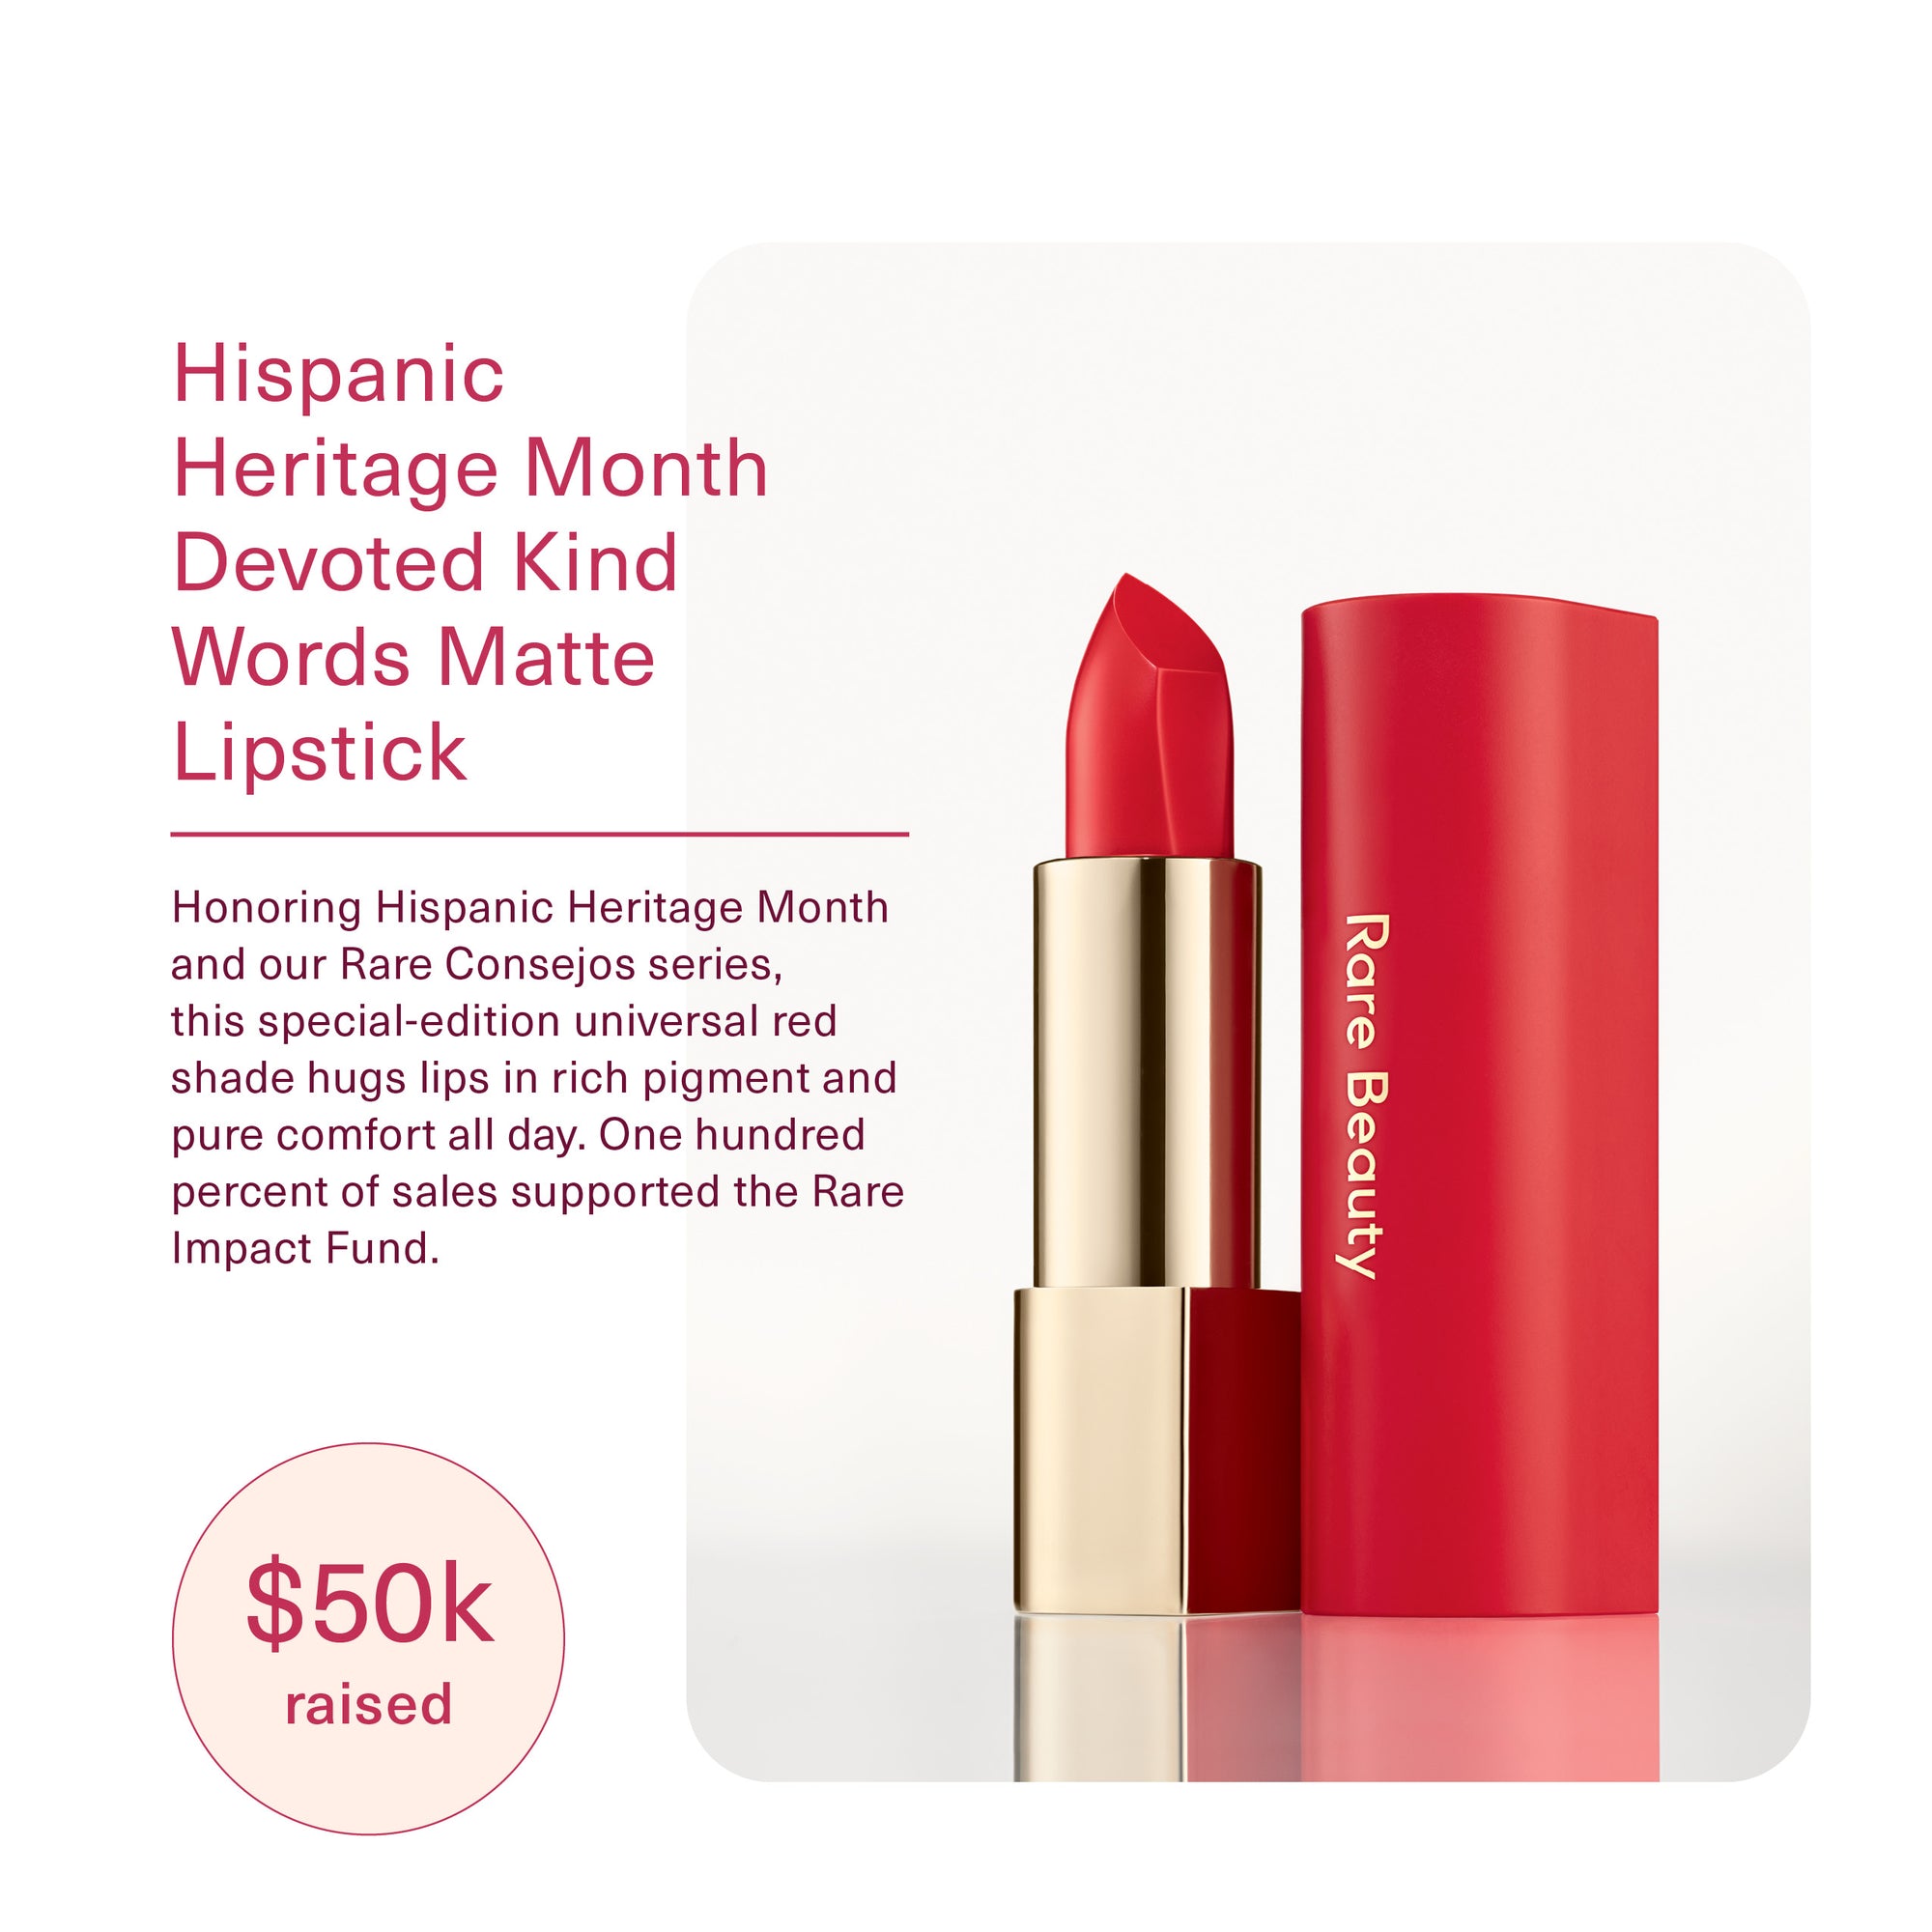 Hispanic Heritage Month raised $50k 